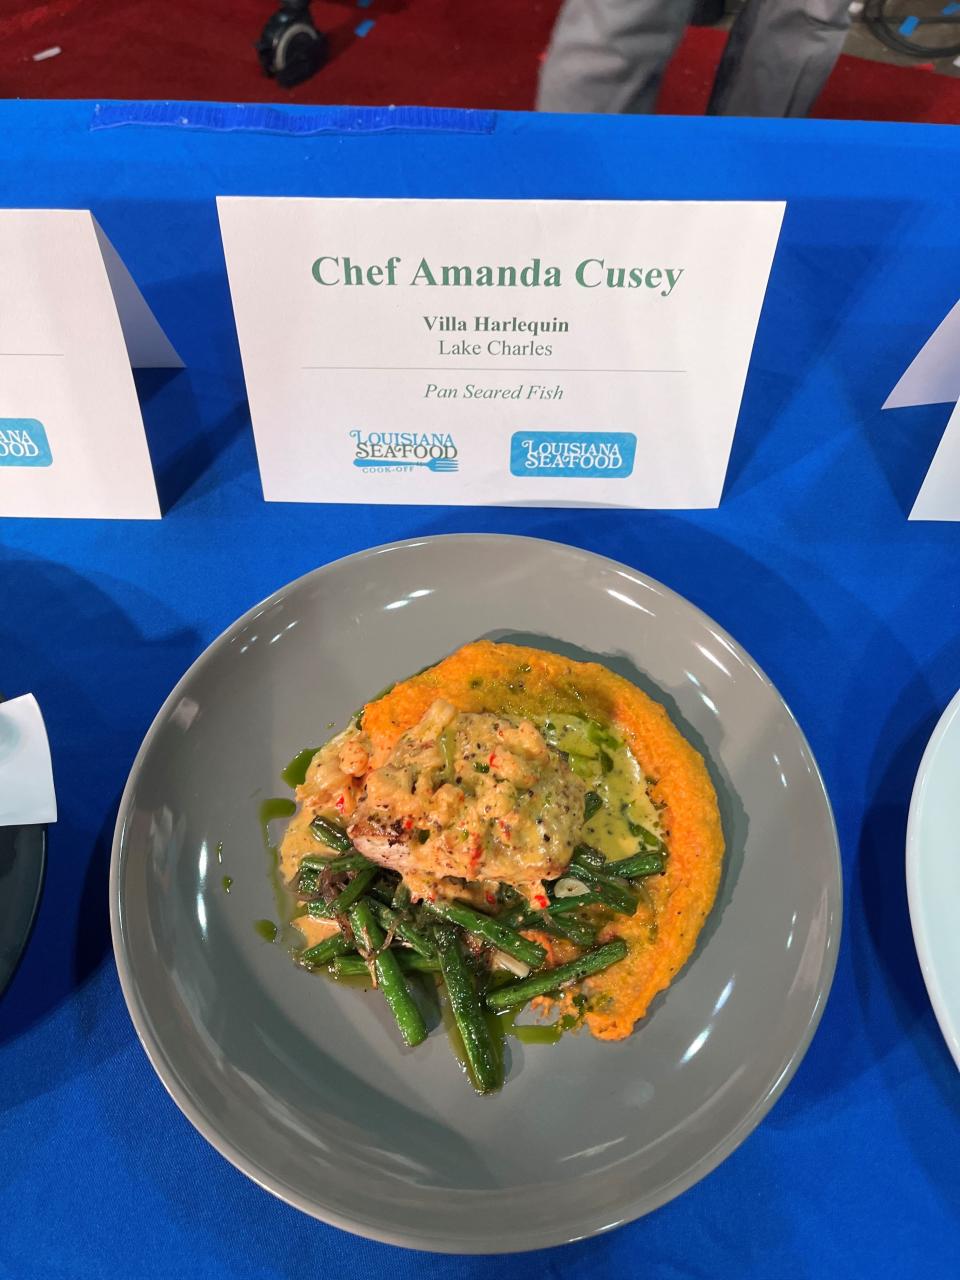 Amanda Cusey's winning dish at the 2022 Louisiana Seafood Cook-Off in Lafayette.